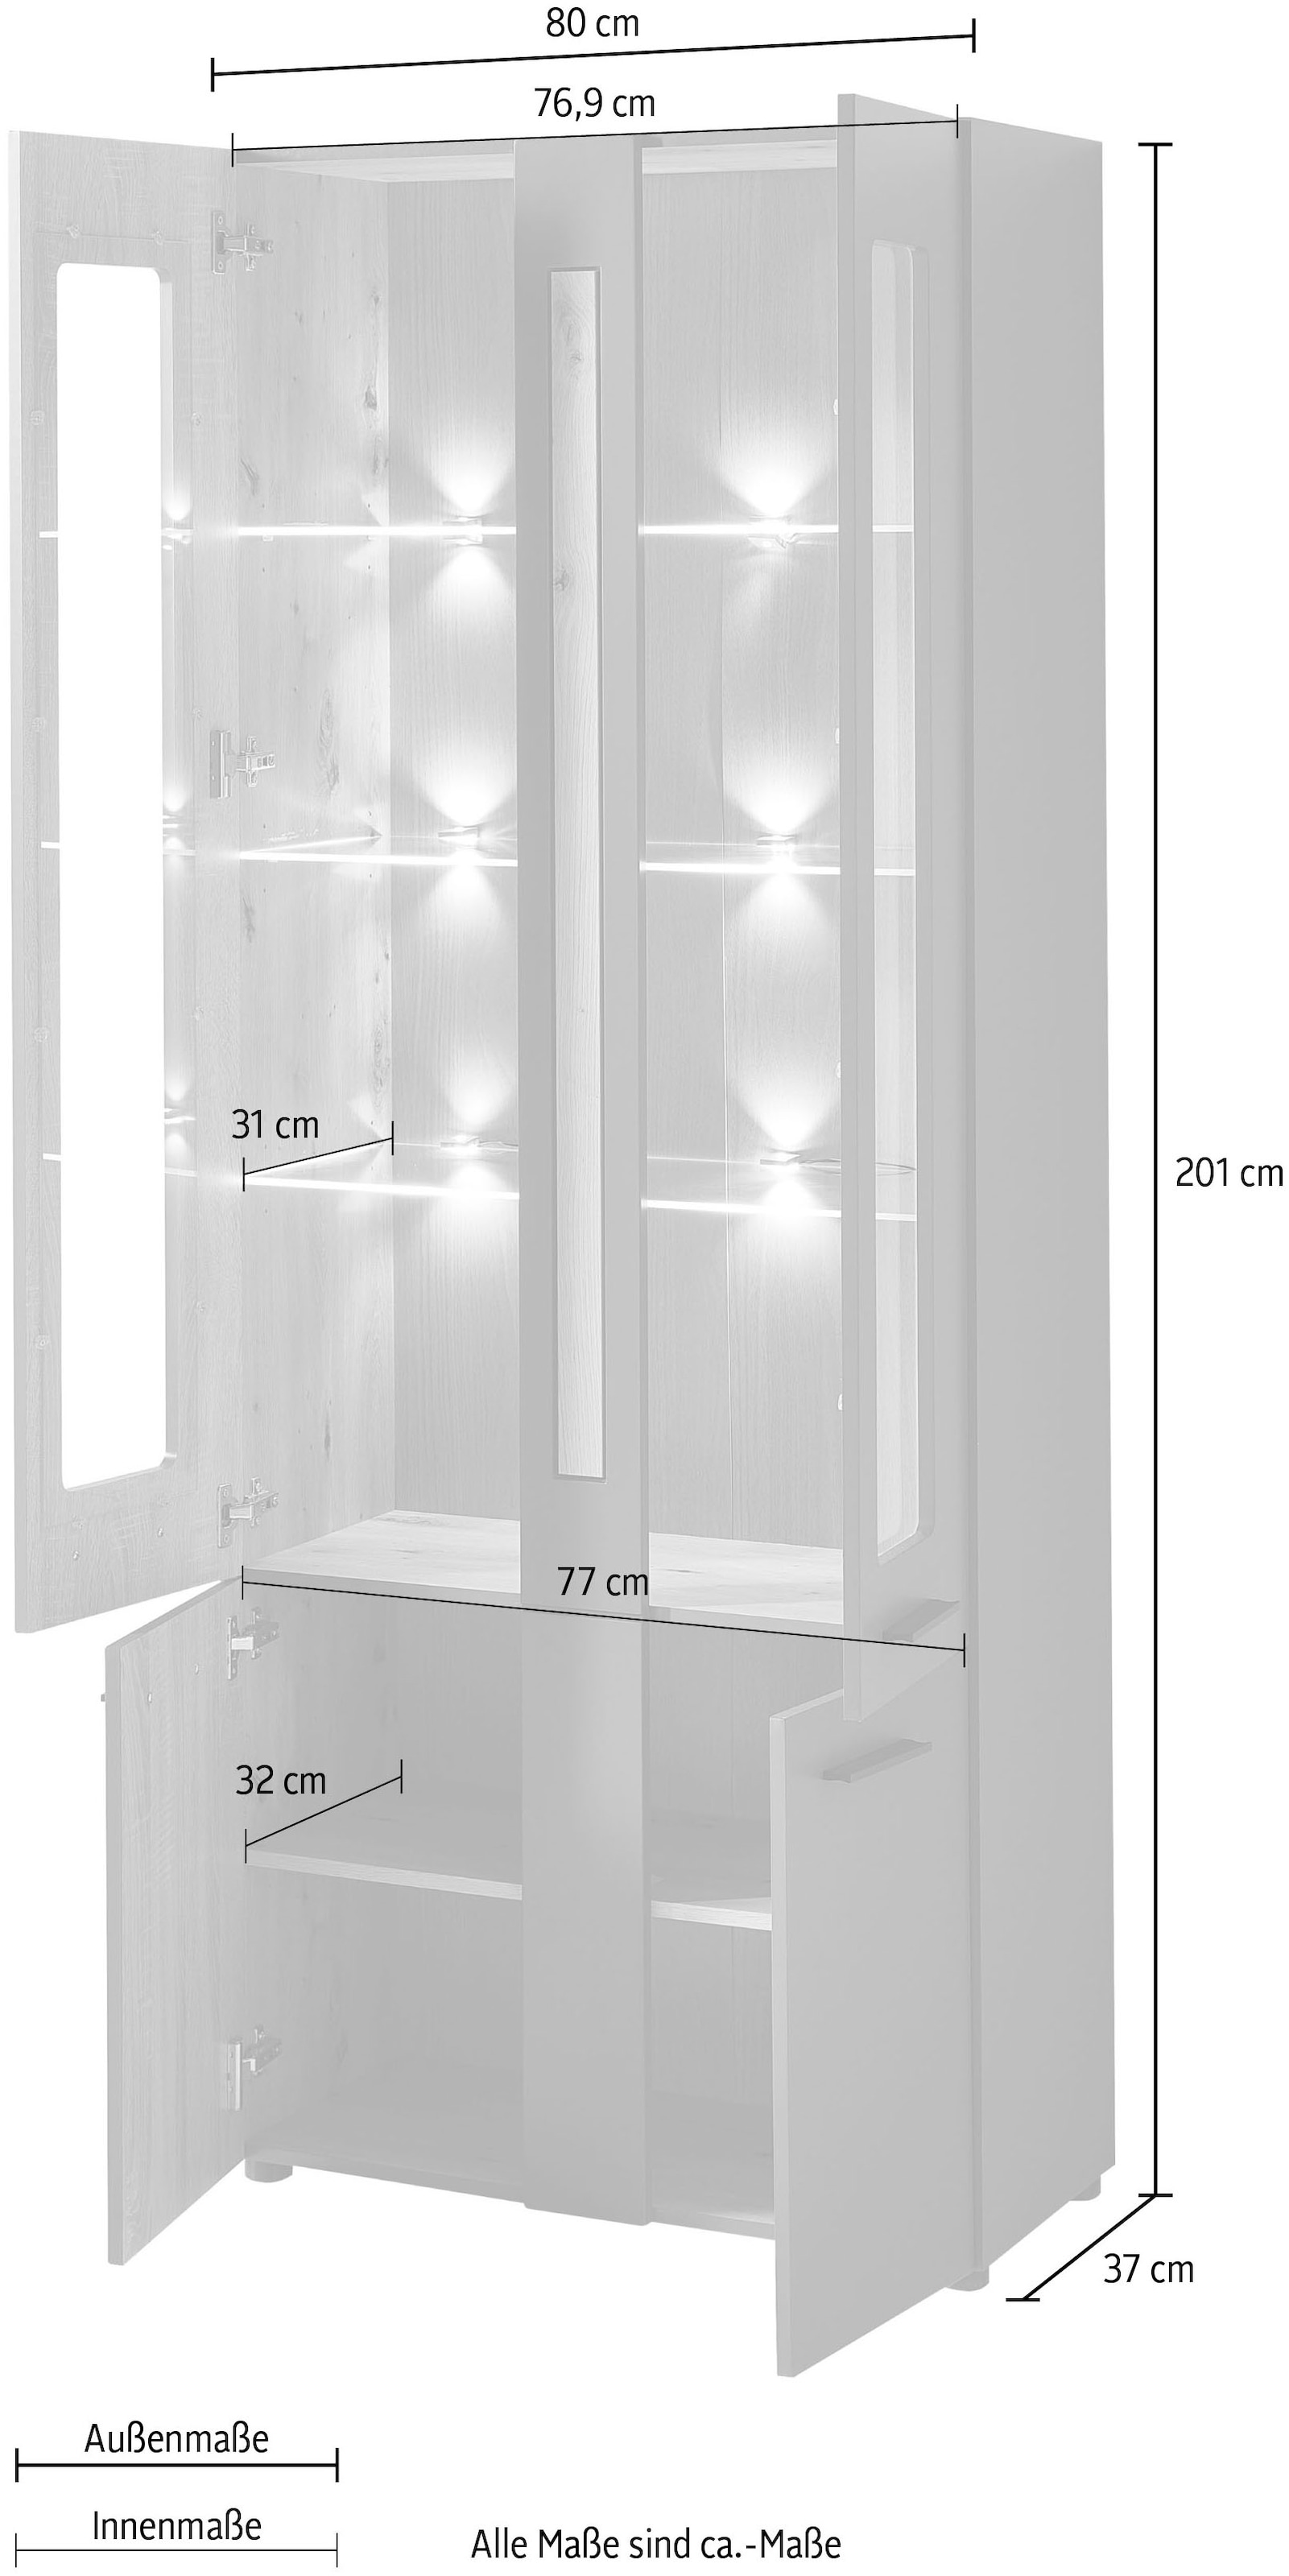 Innostyle Standvitrine inkl. Online mit Two«, OTTO Shop »Loft Beleuchtung Soft-Close-Funktion